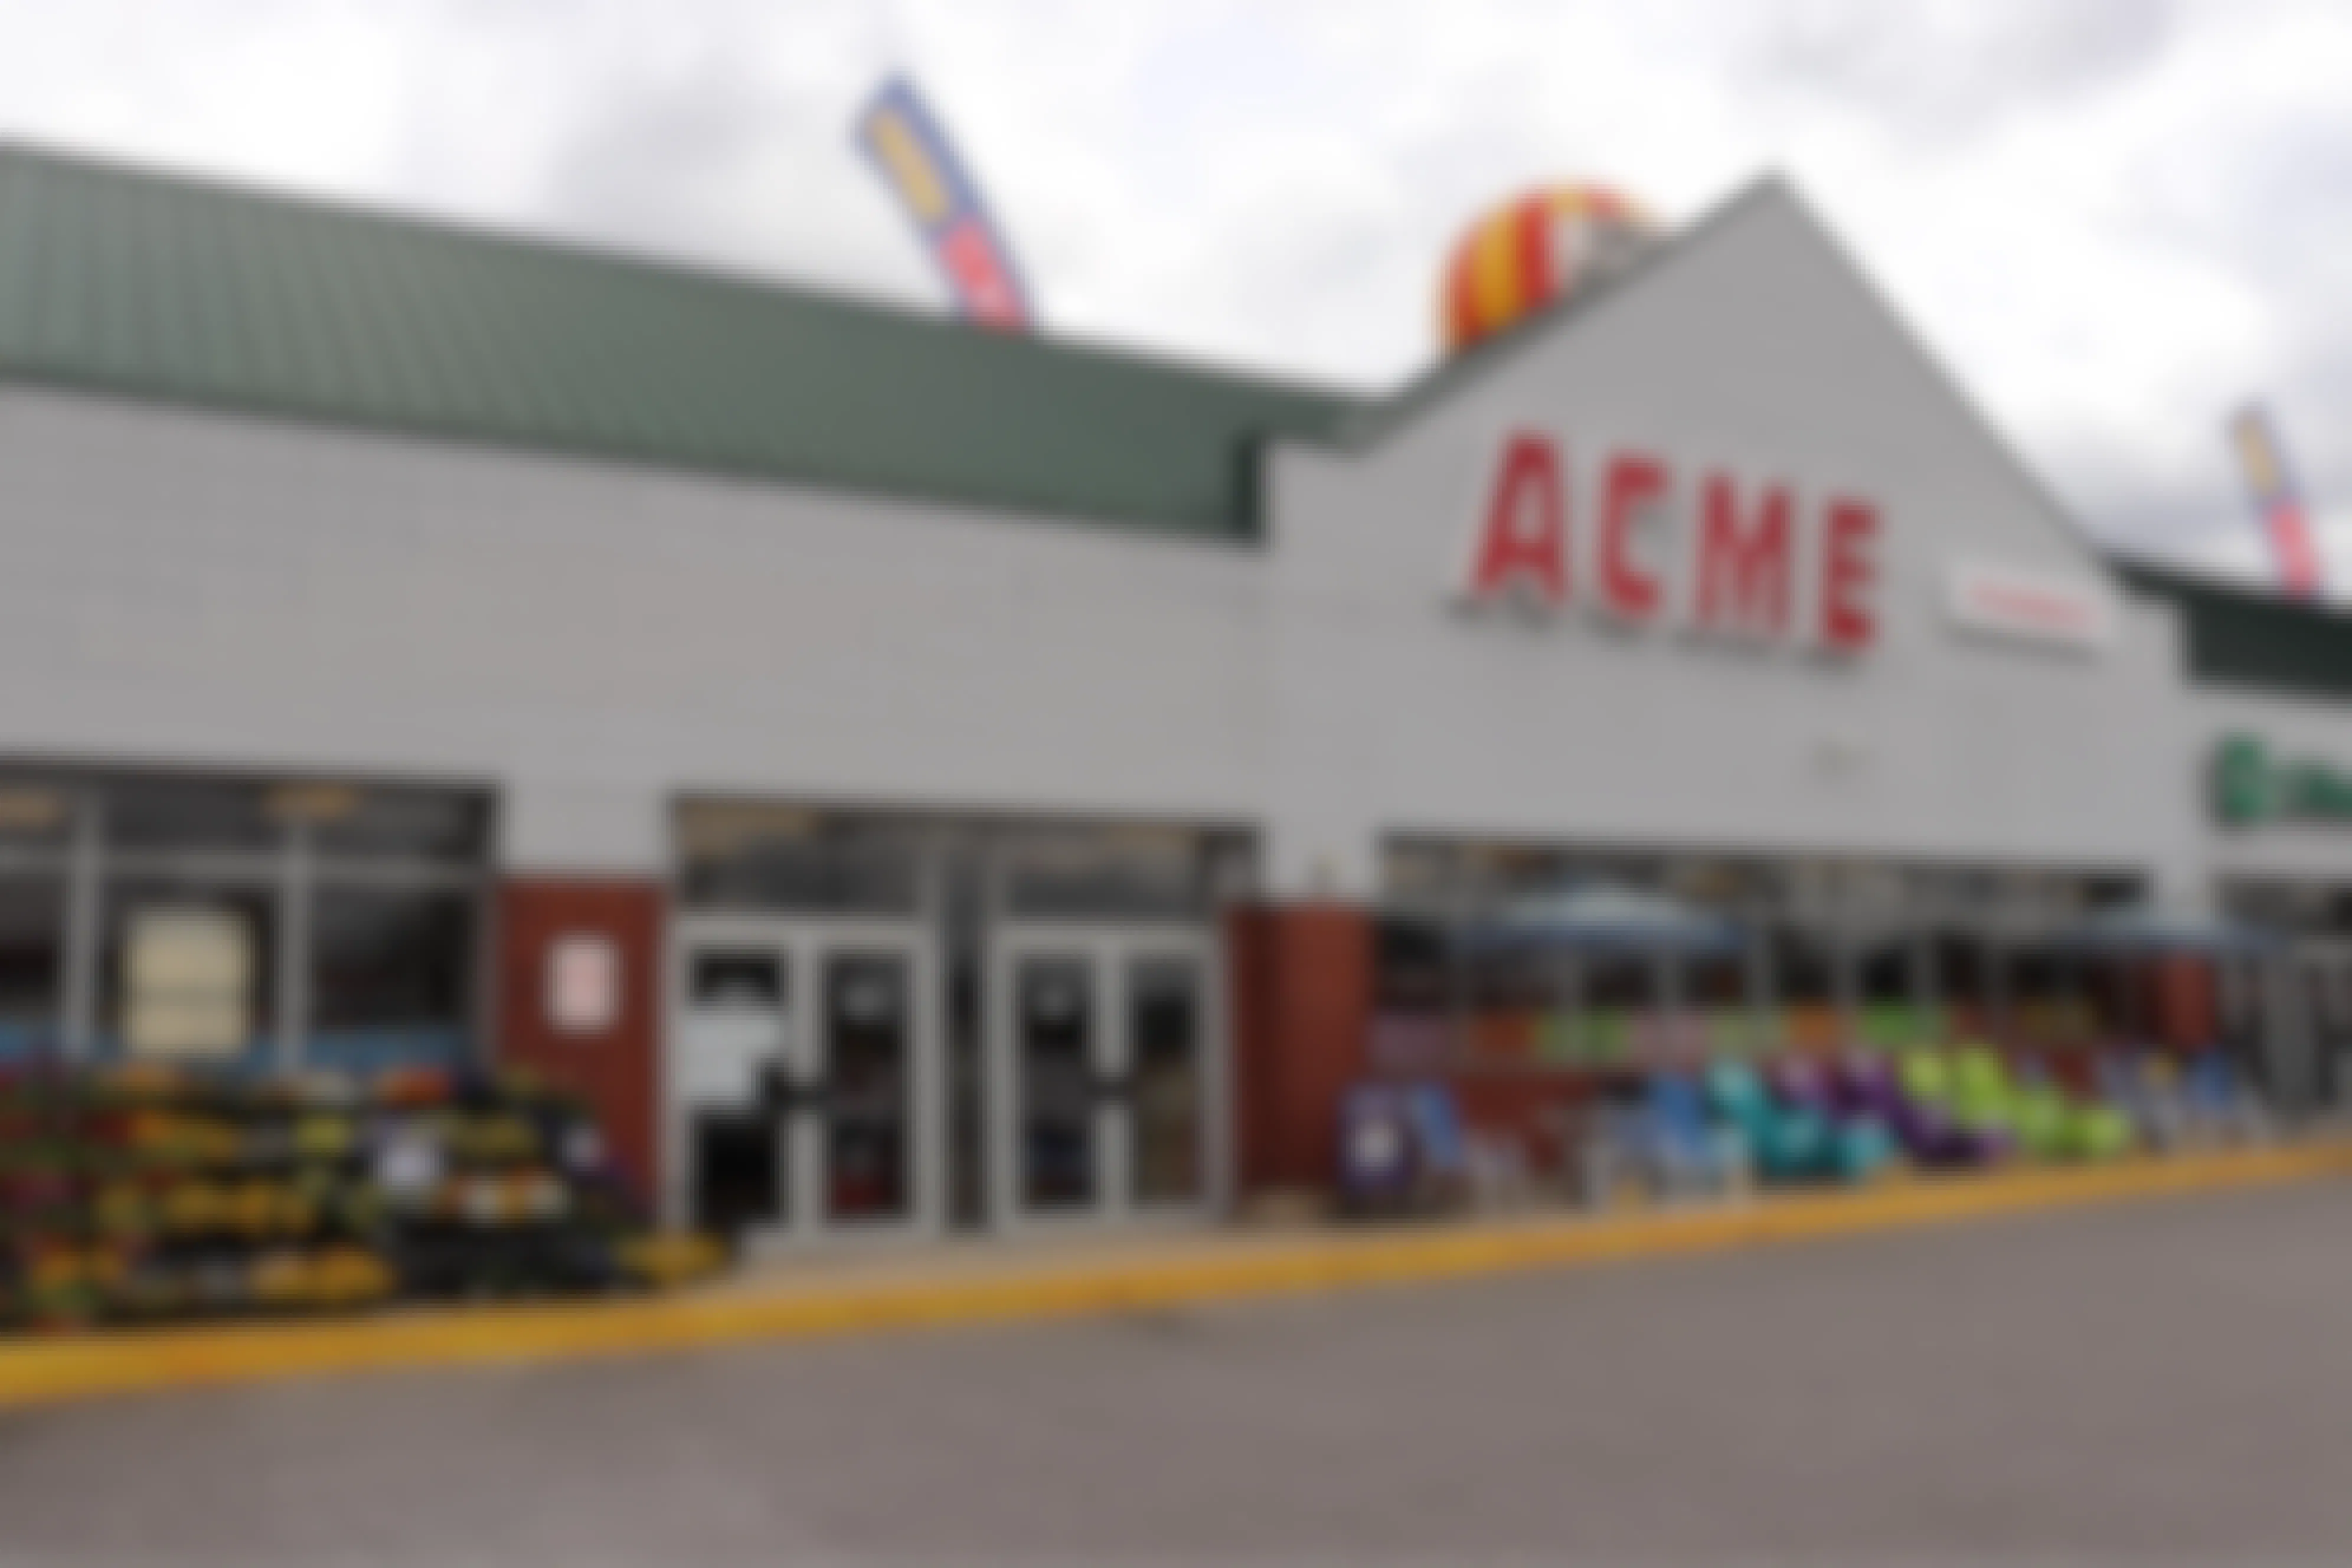 Acme grocery storefront doors